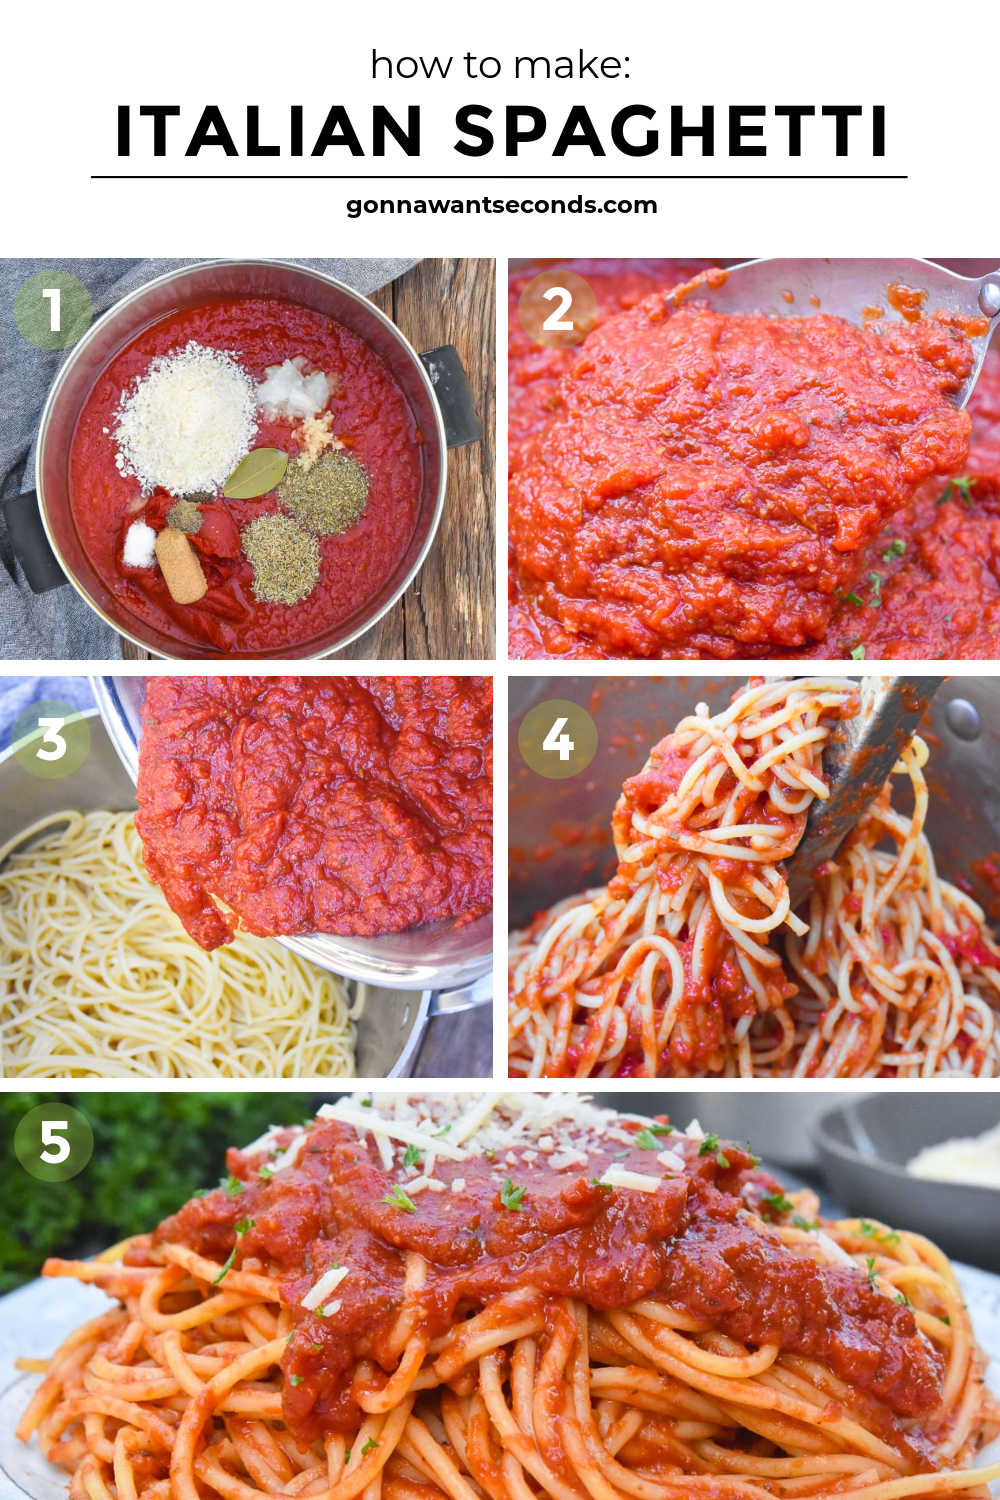 Step by step how to make Italian spaghetti